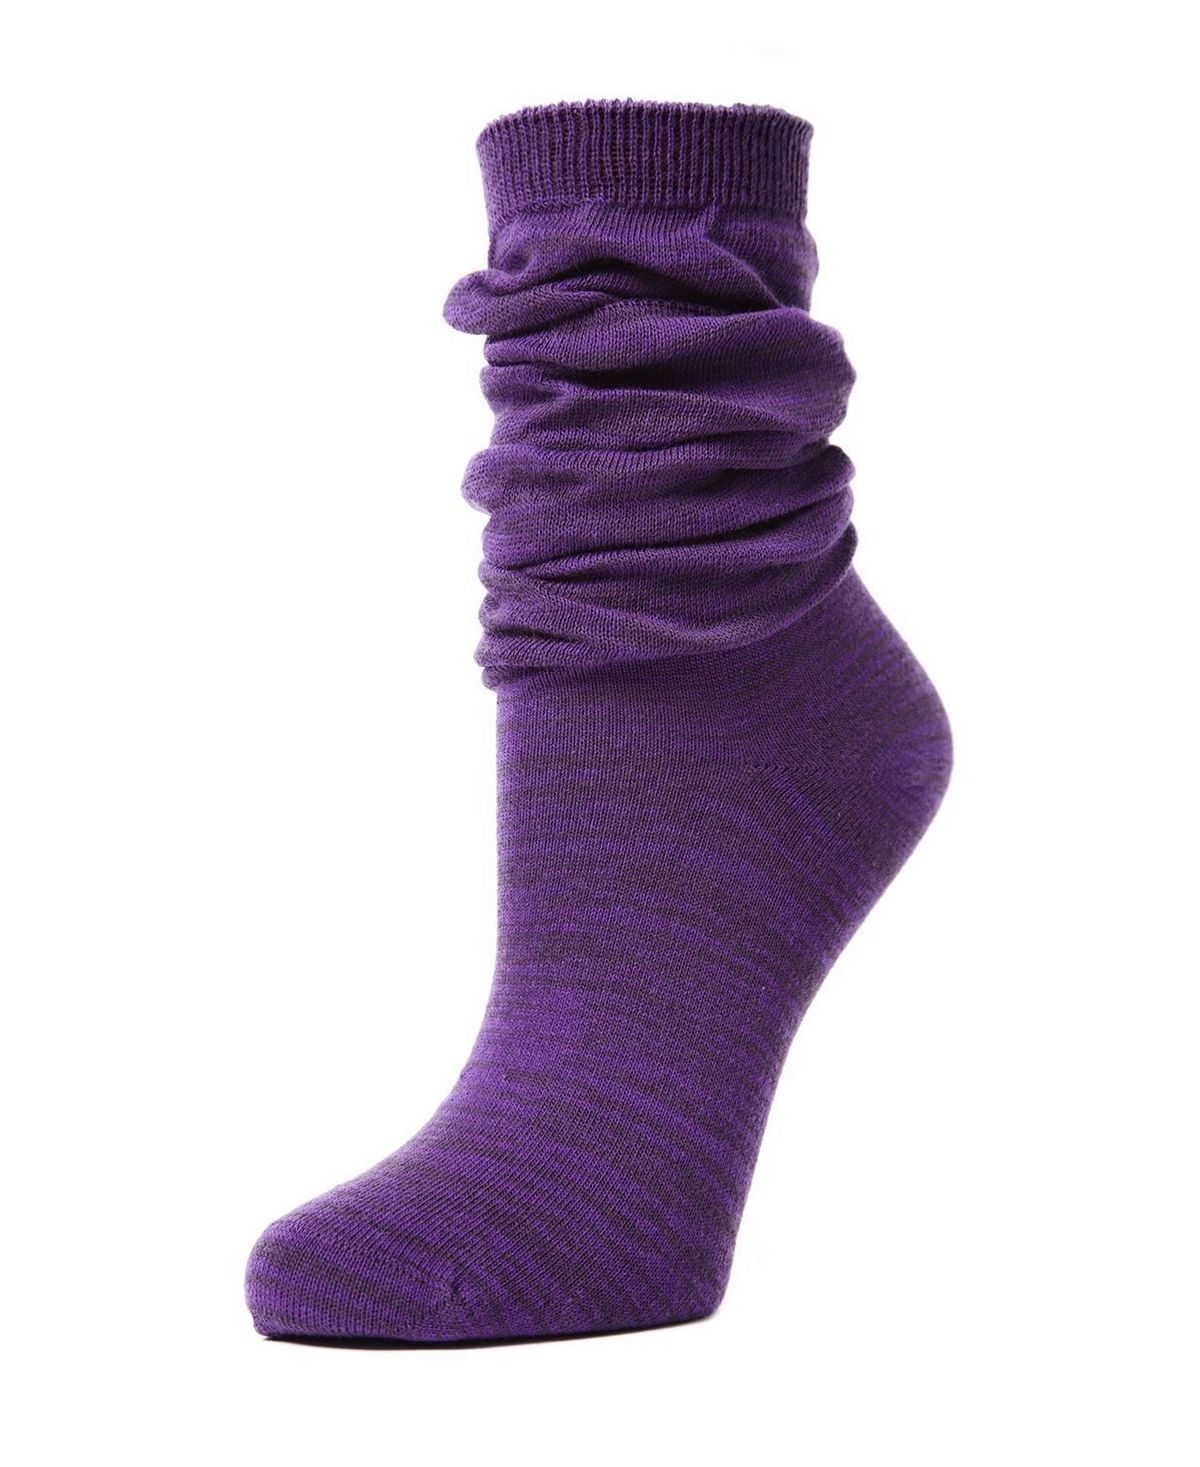 Женские носки для отдыха на подкладке из шерпы Flake Zag MeMoi ежевика thornfree blackberry